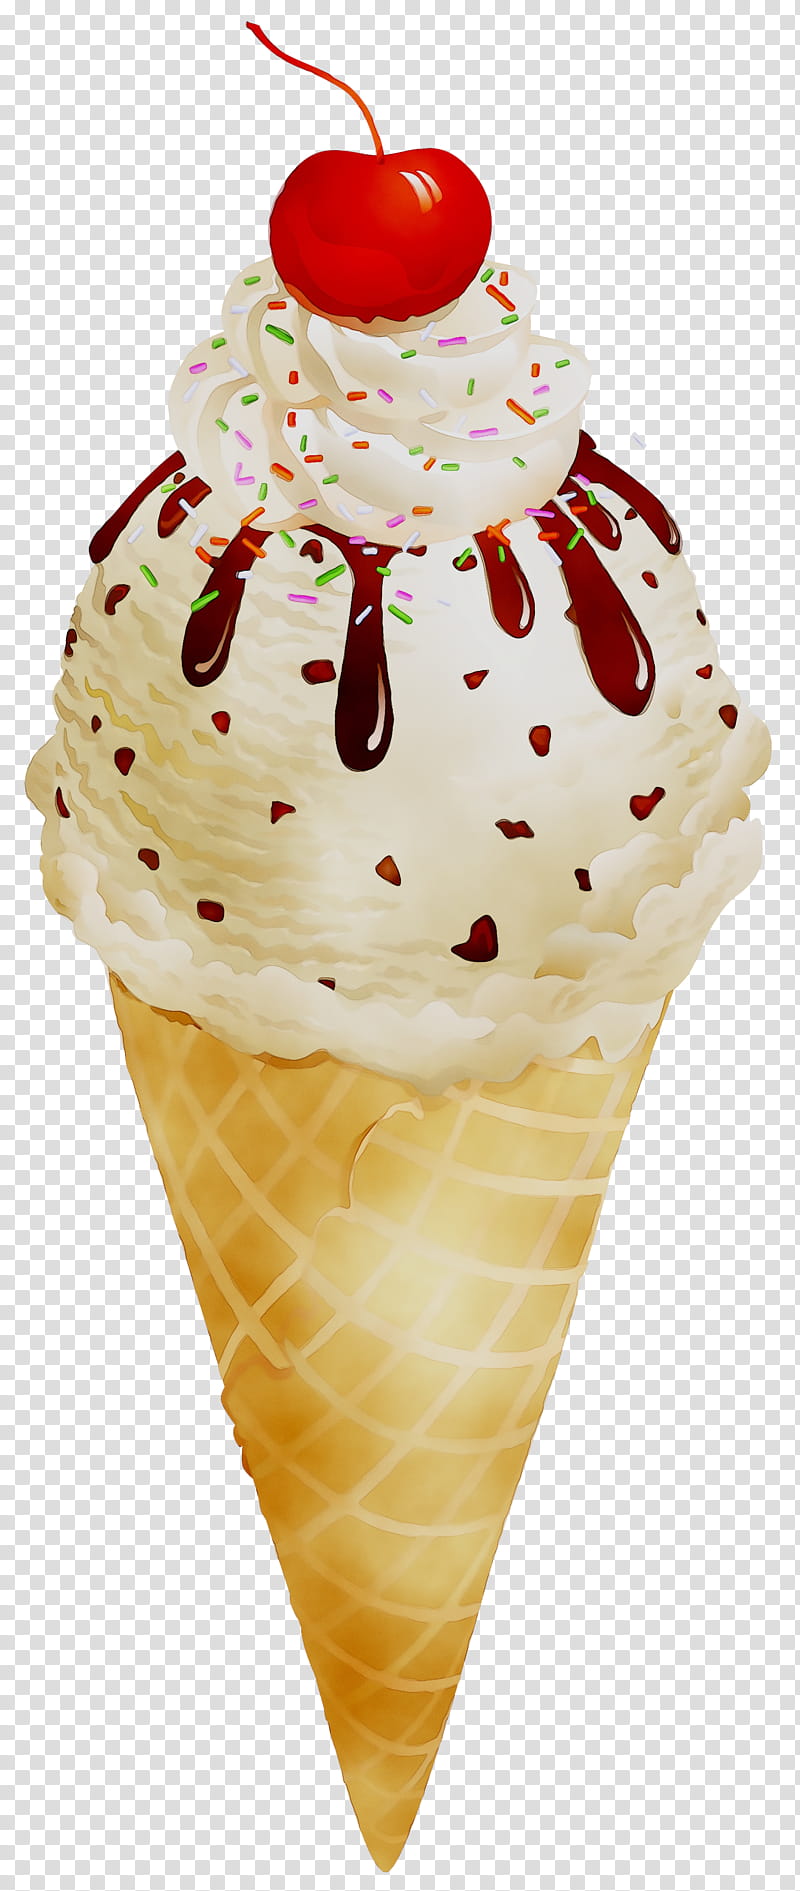 Ice Cream Cone, Sundae, Ice Cream Cones, Milkshake, Gelato, Smoothie, Knickerbocker Glory, Chocolate Ice Cream transparent background PNG clipart